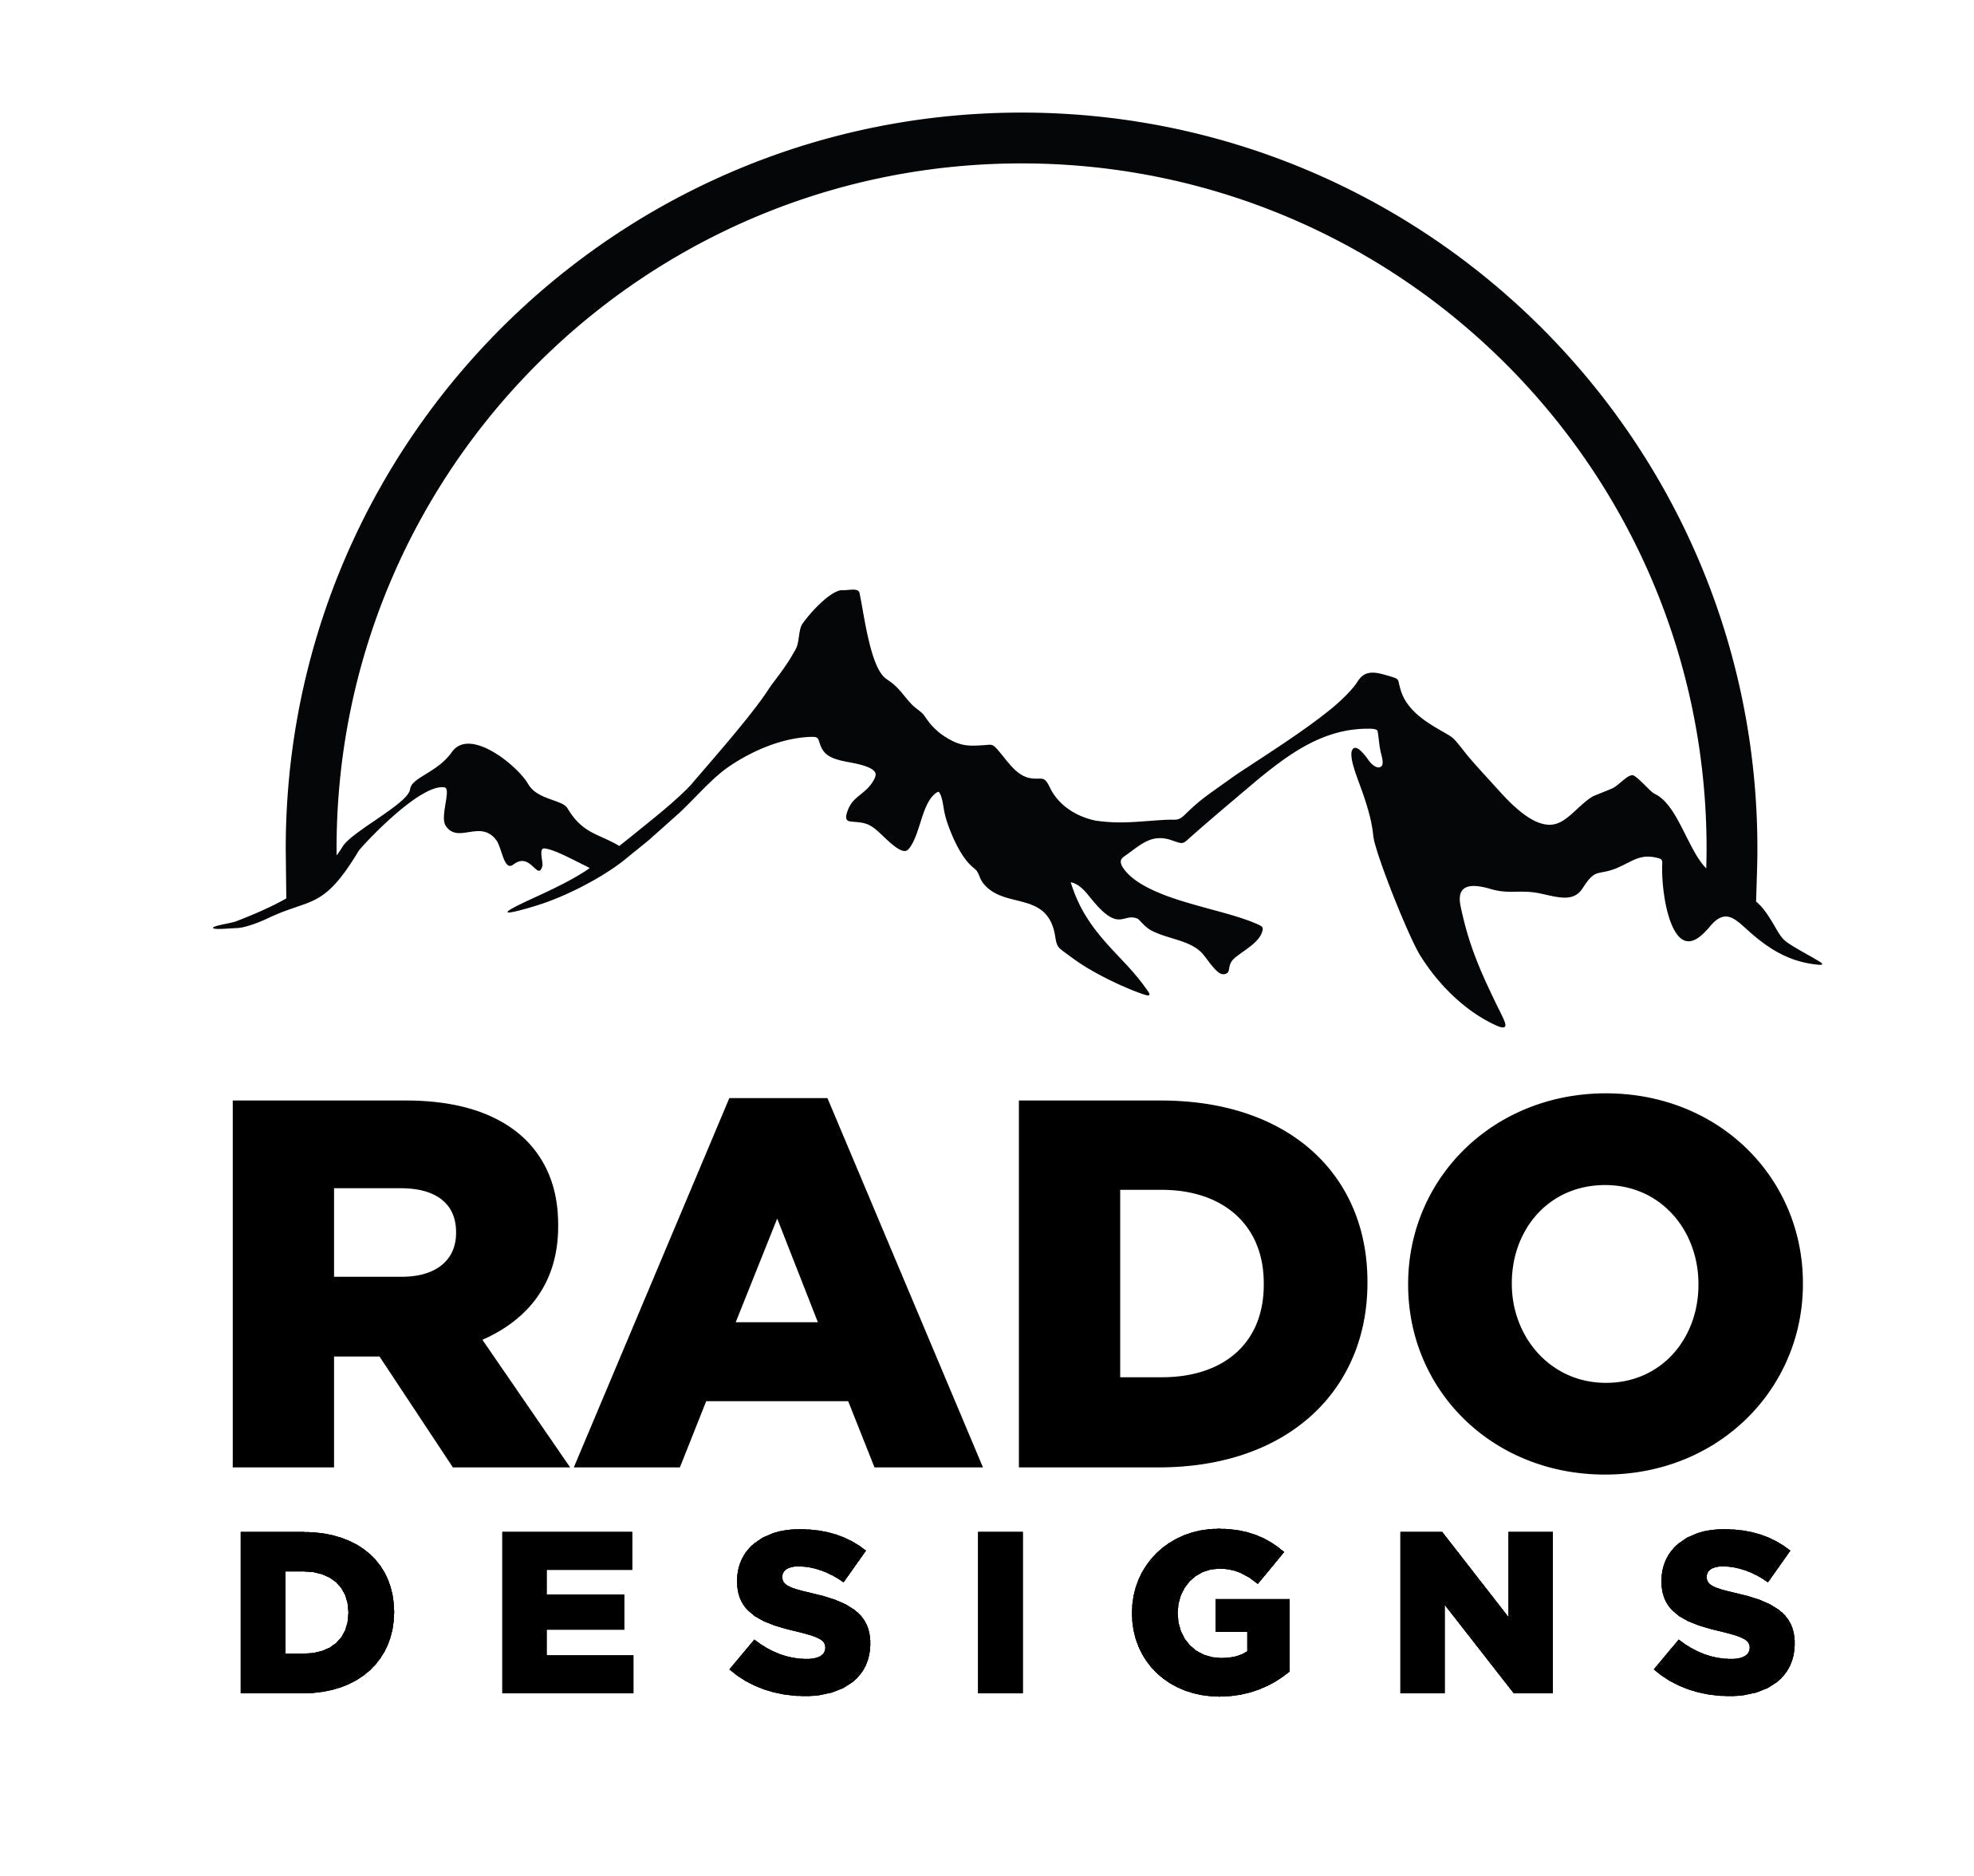 Rado - 3D Brand Logo Animation - 3d-logo.co.uk - YouTube